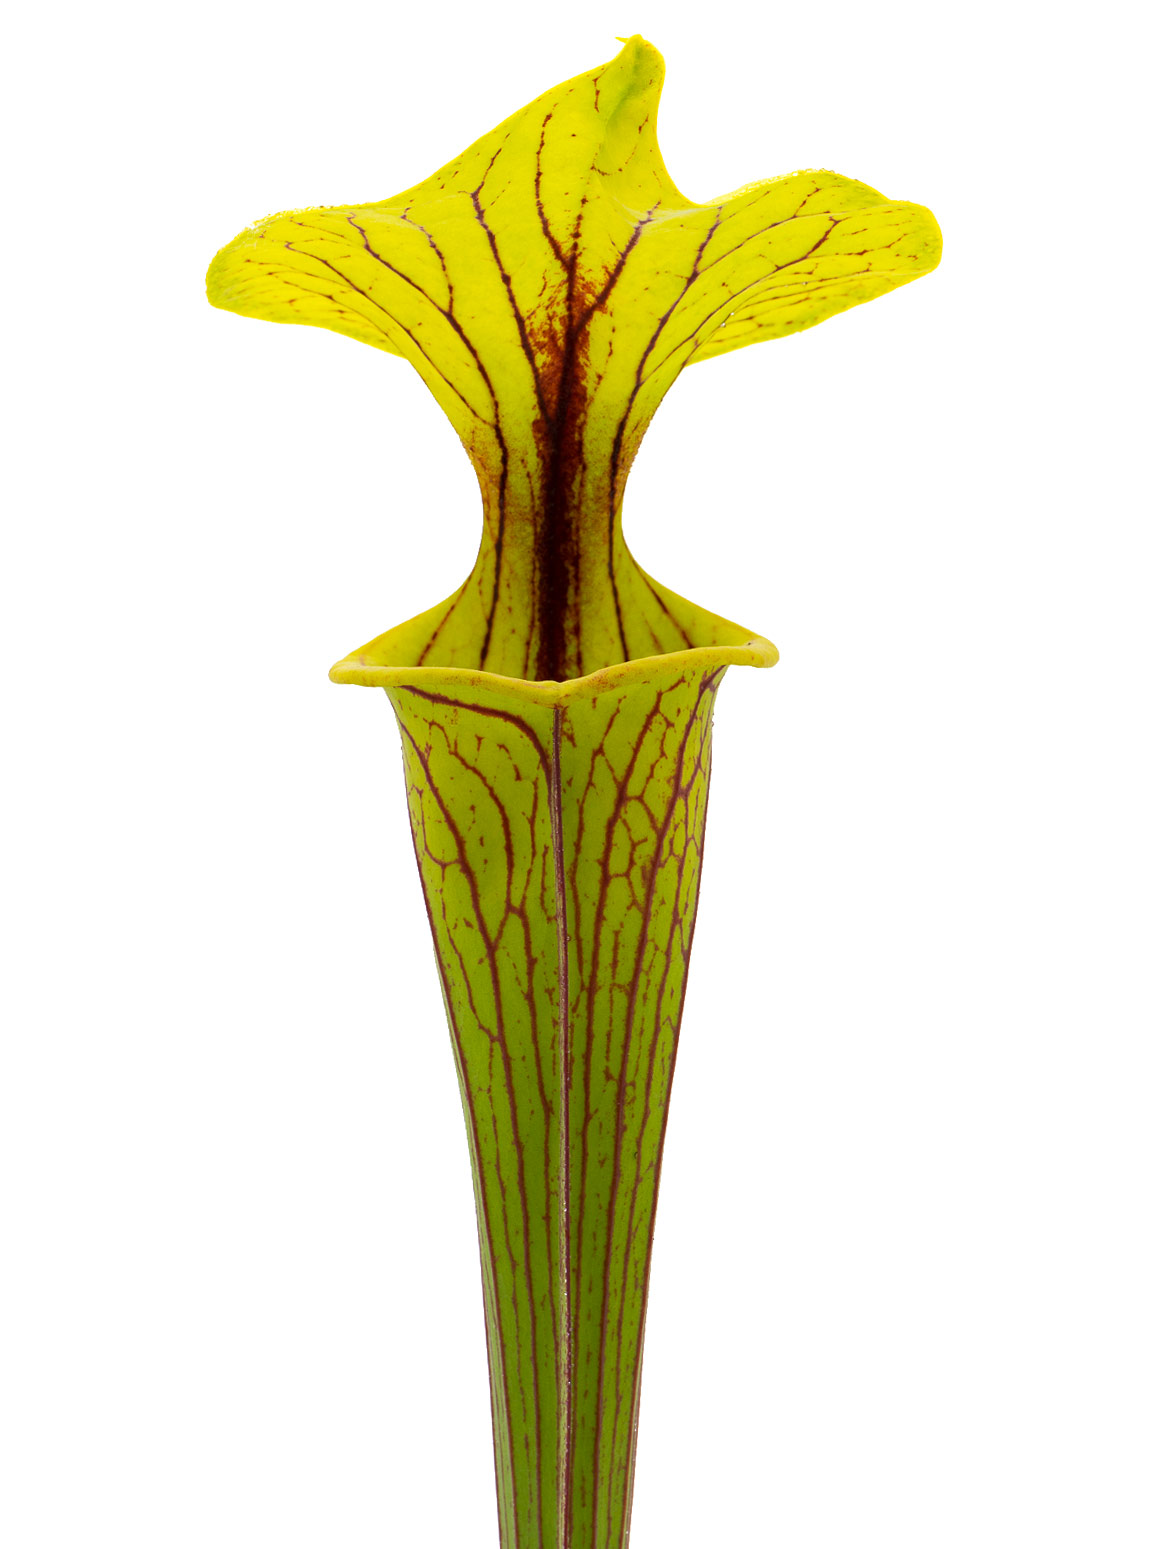 Sarracenia flava var. ornata - MK F256, large form, Apalachicola National Forest, Florida